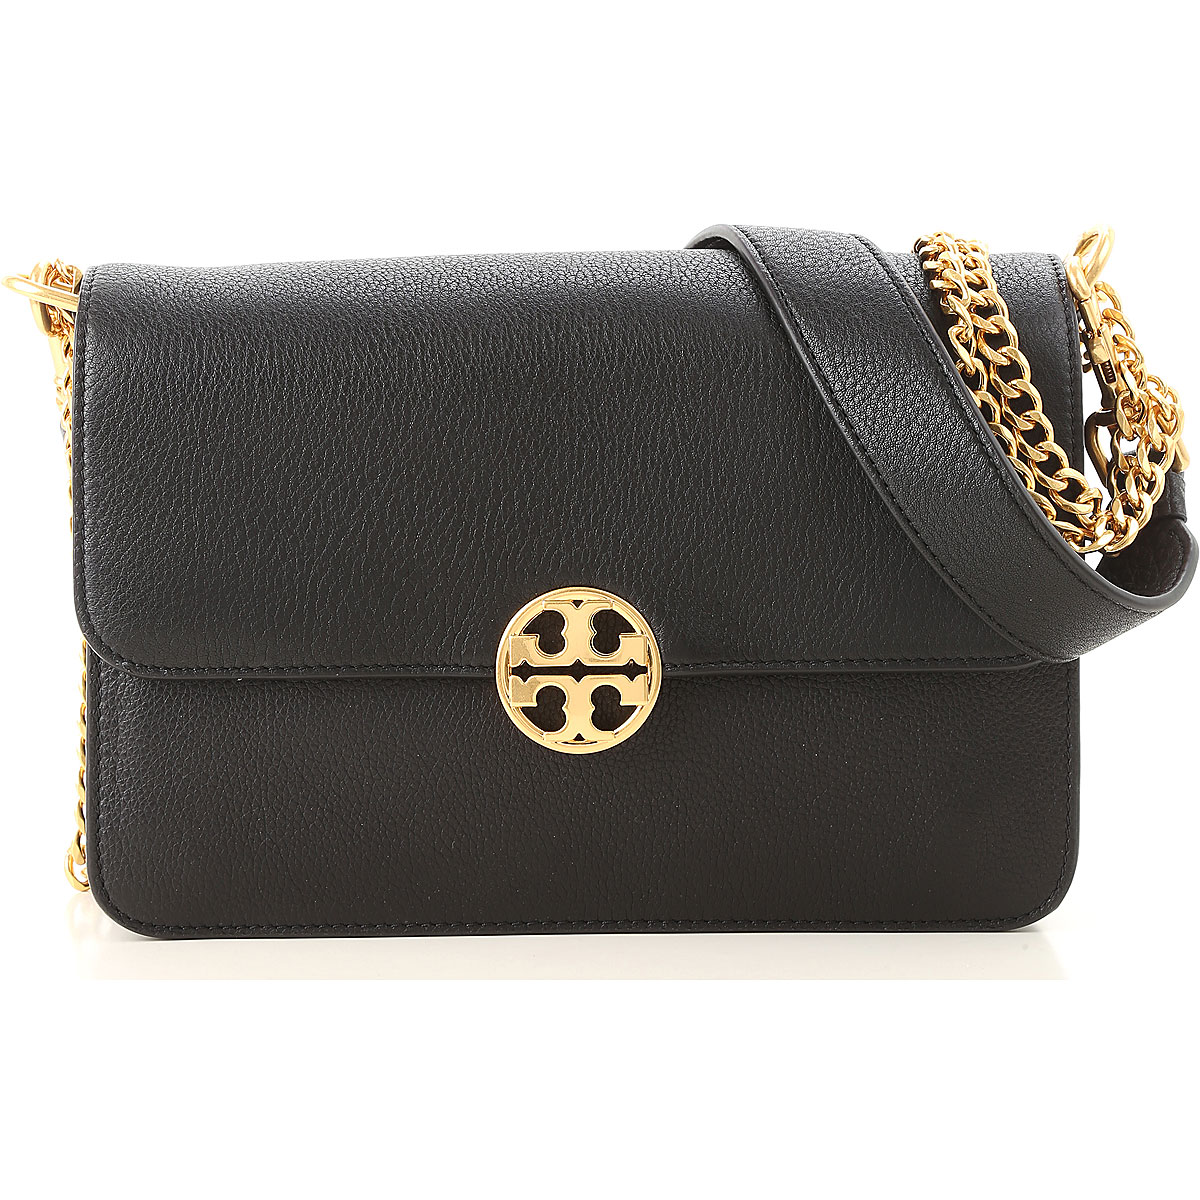 Handbags Tory Burch, Style code: 48735-001-